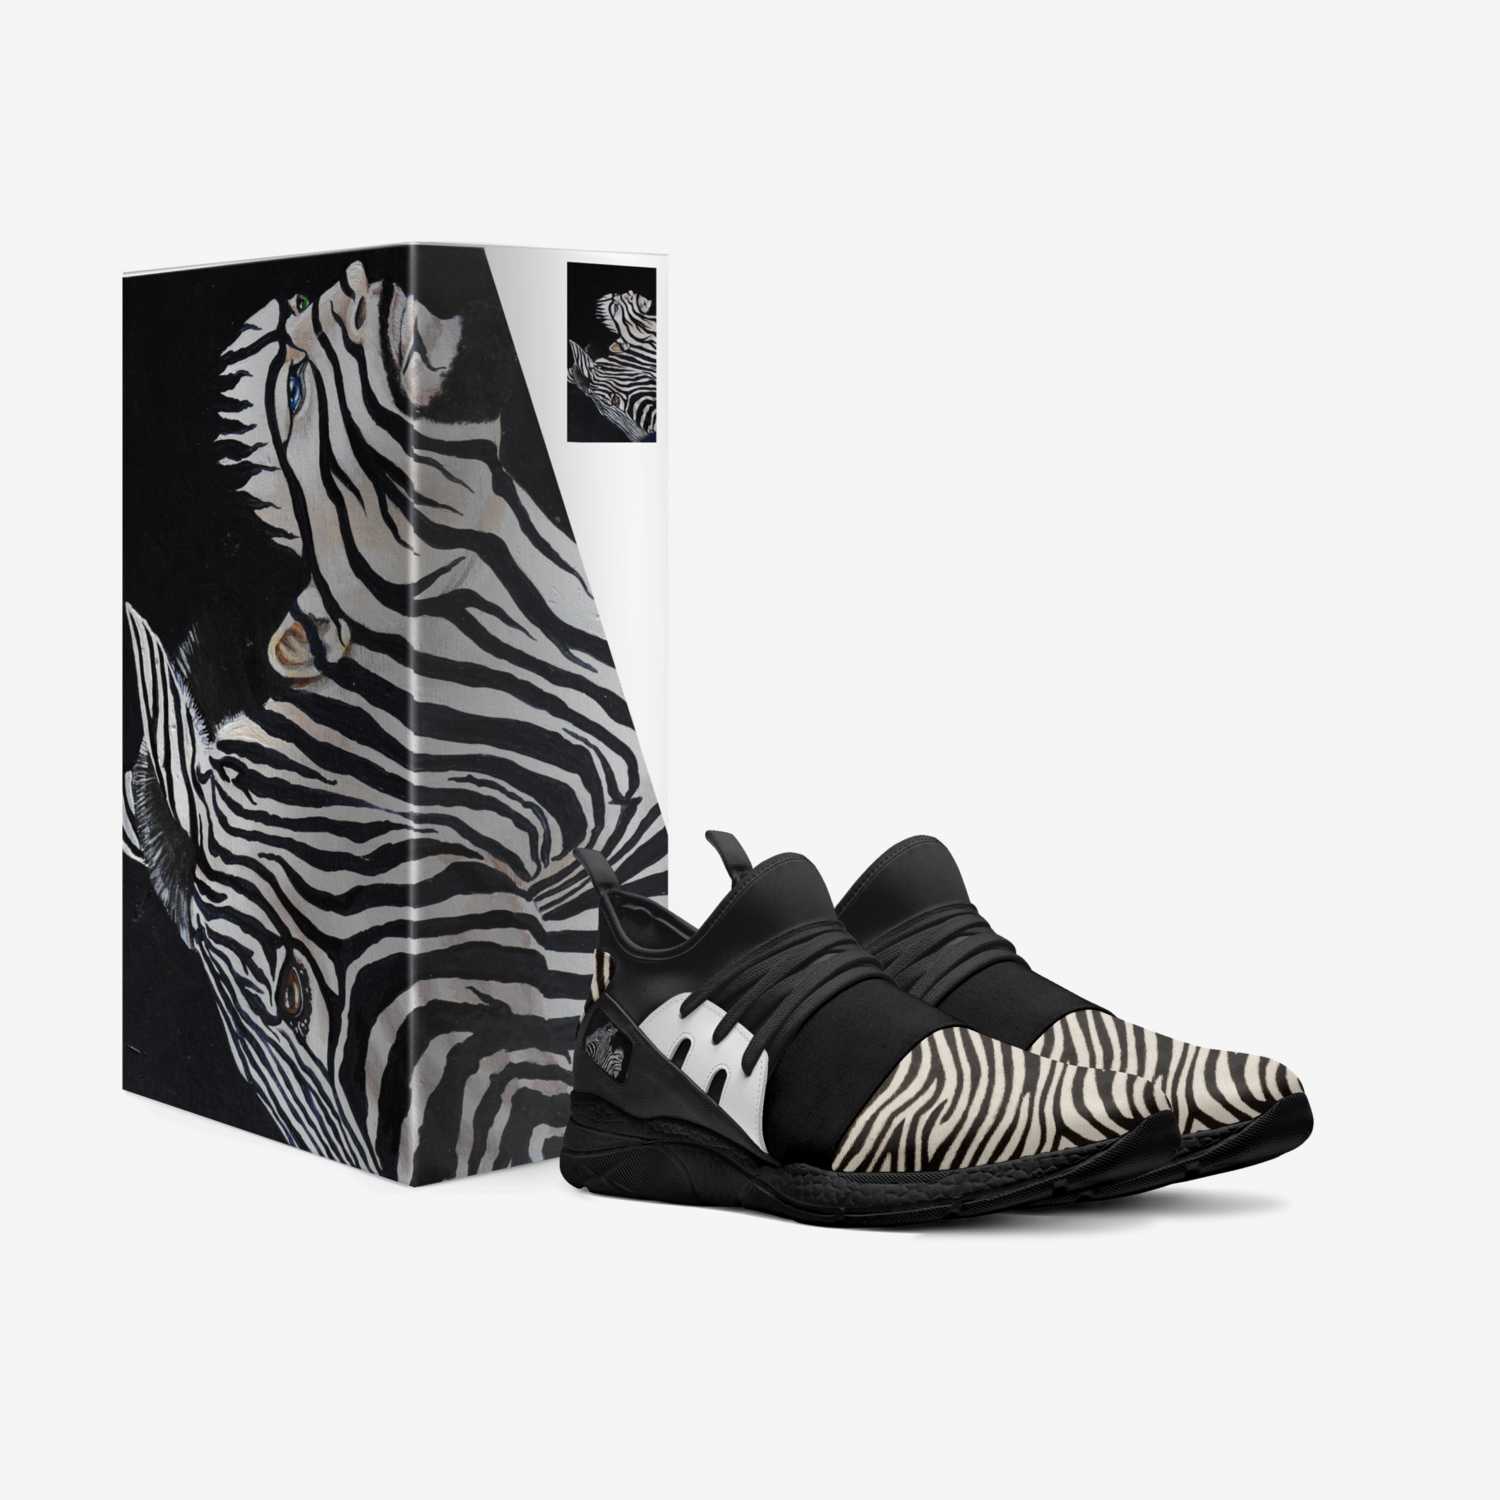 ZEBRA KNIGHT custom made in Italy shoes by Zebra Knight | Box view